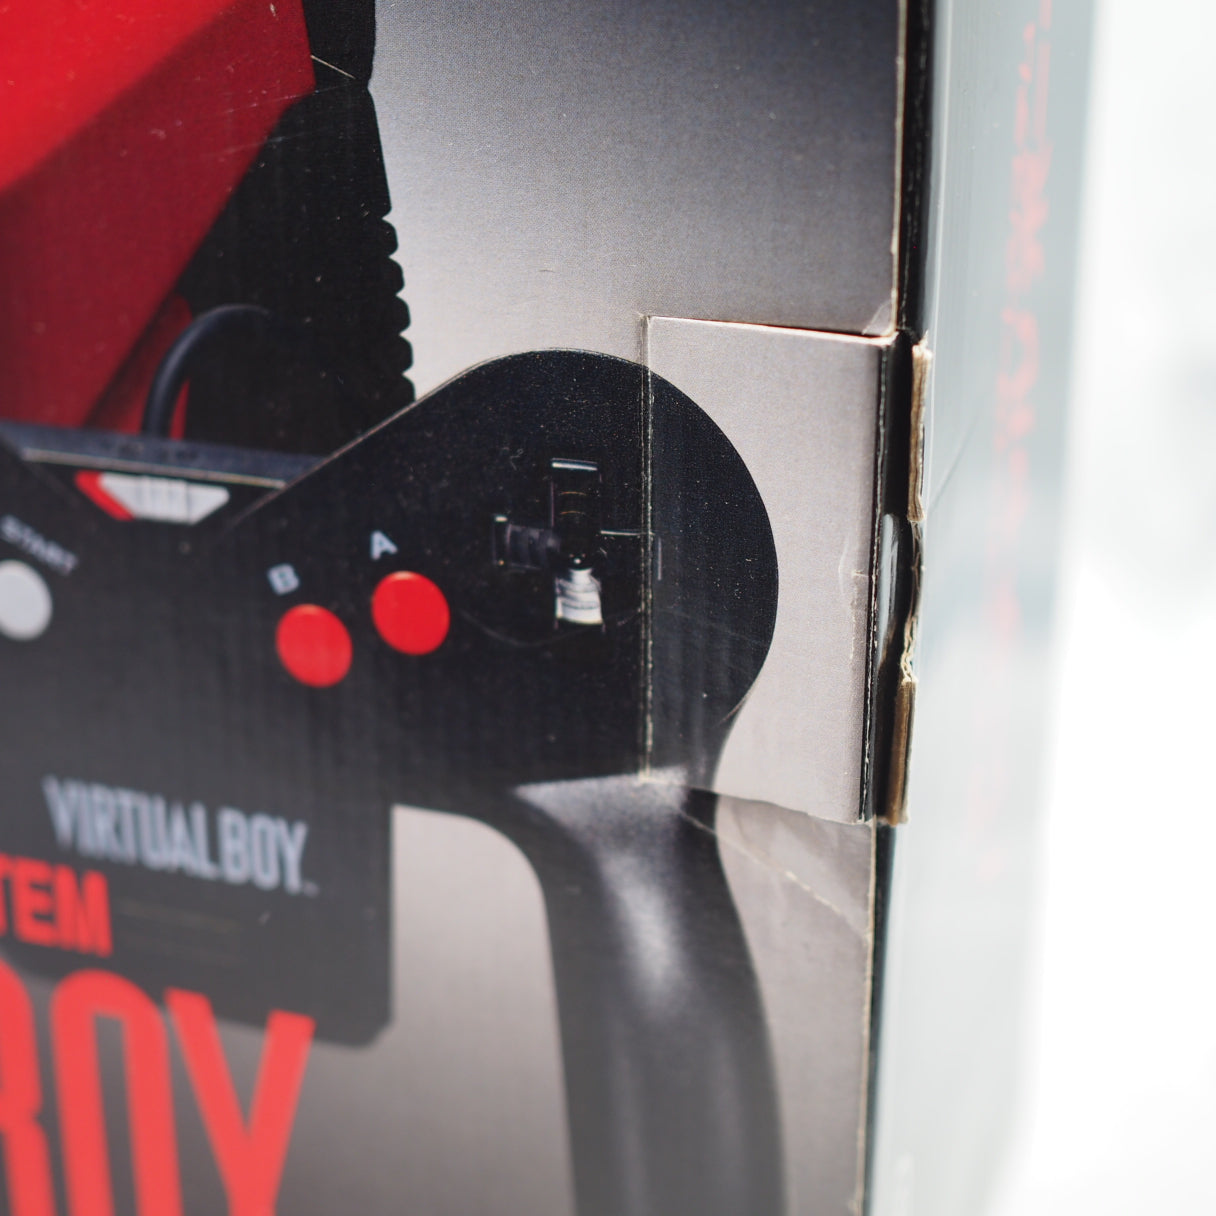 VIRTUAL BOY Nintendo 3D Display Game System Boxed